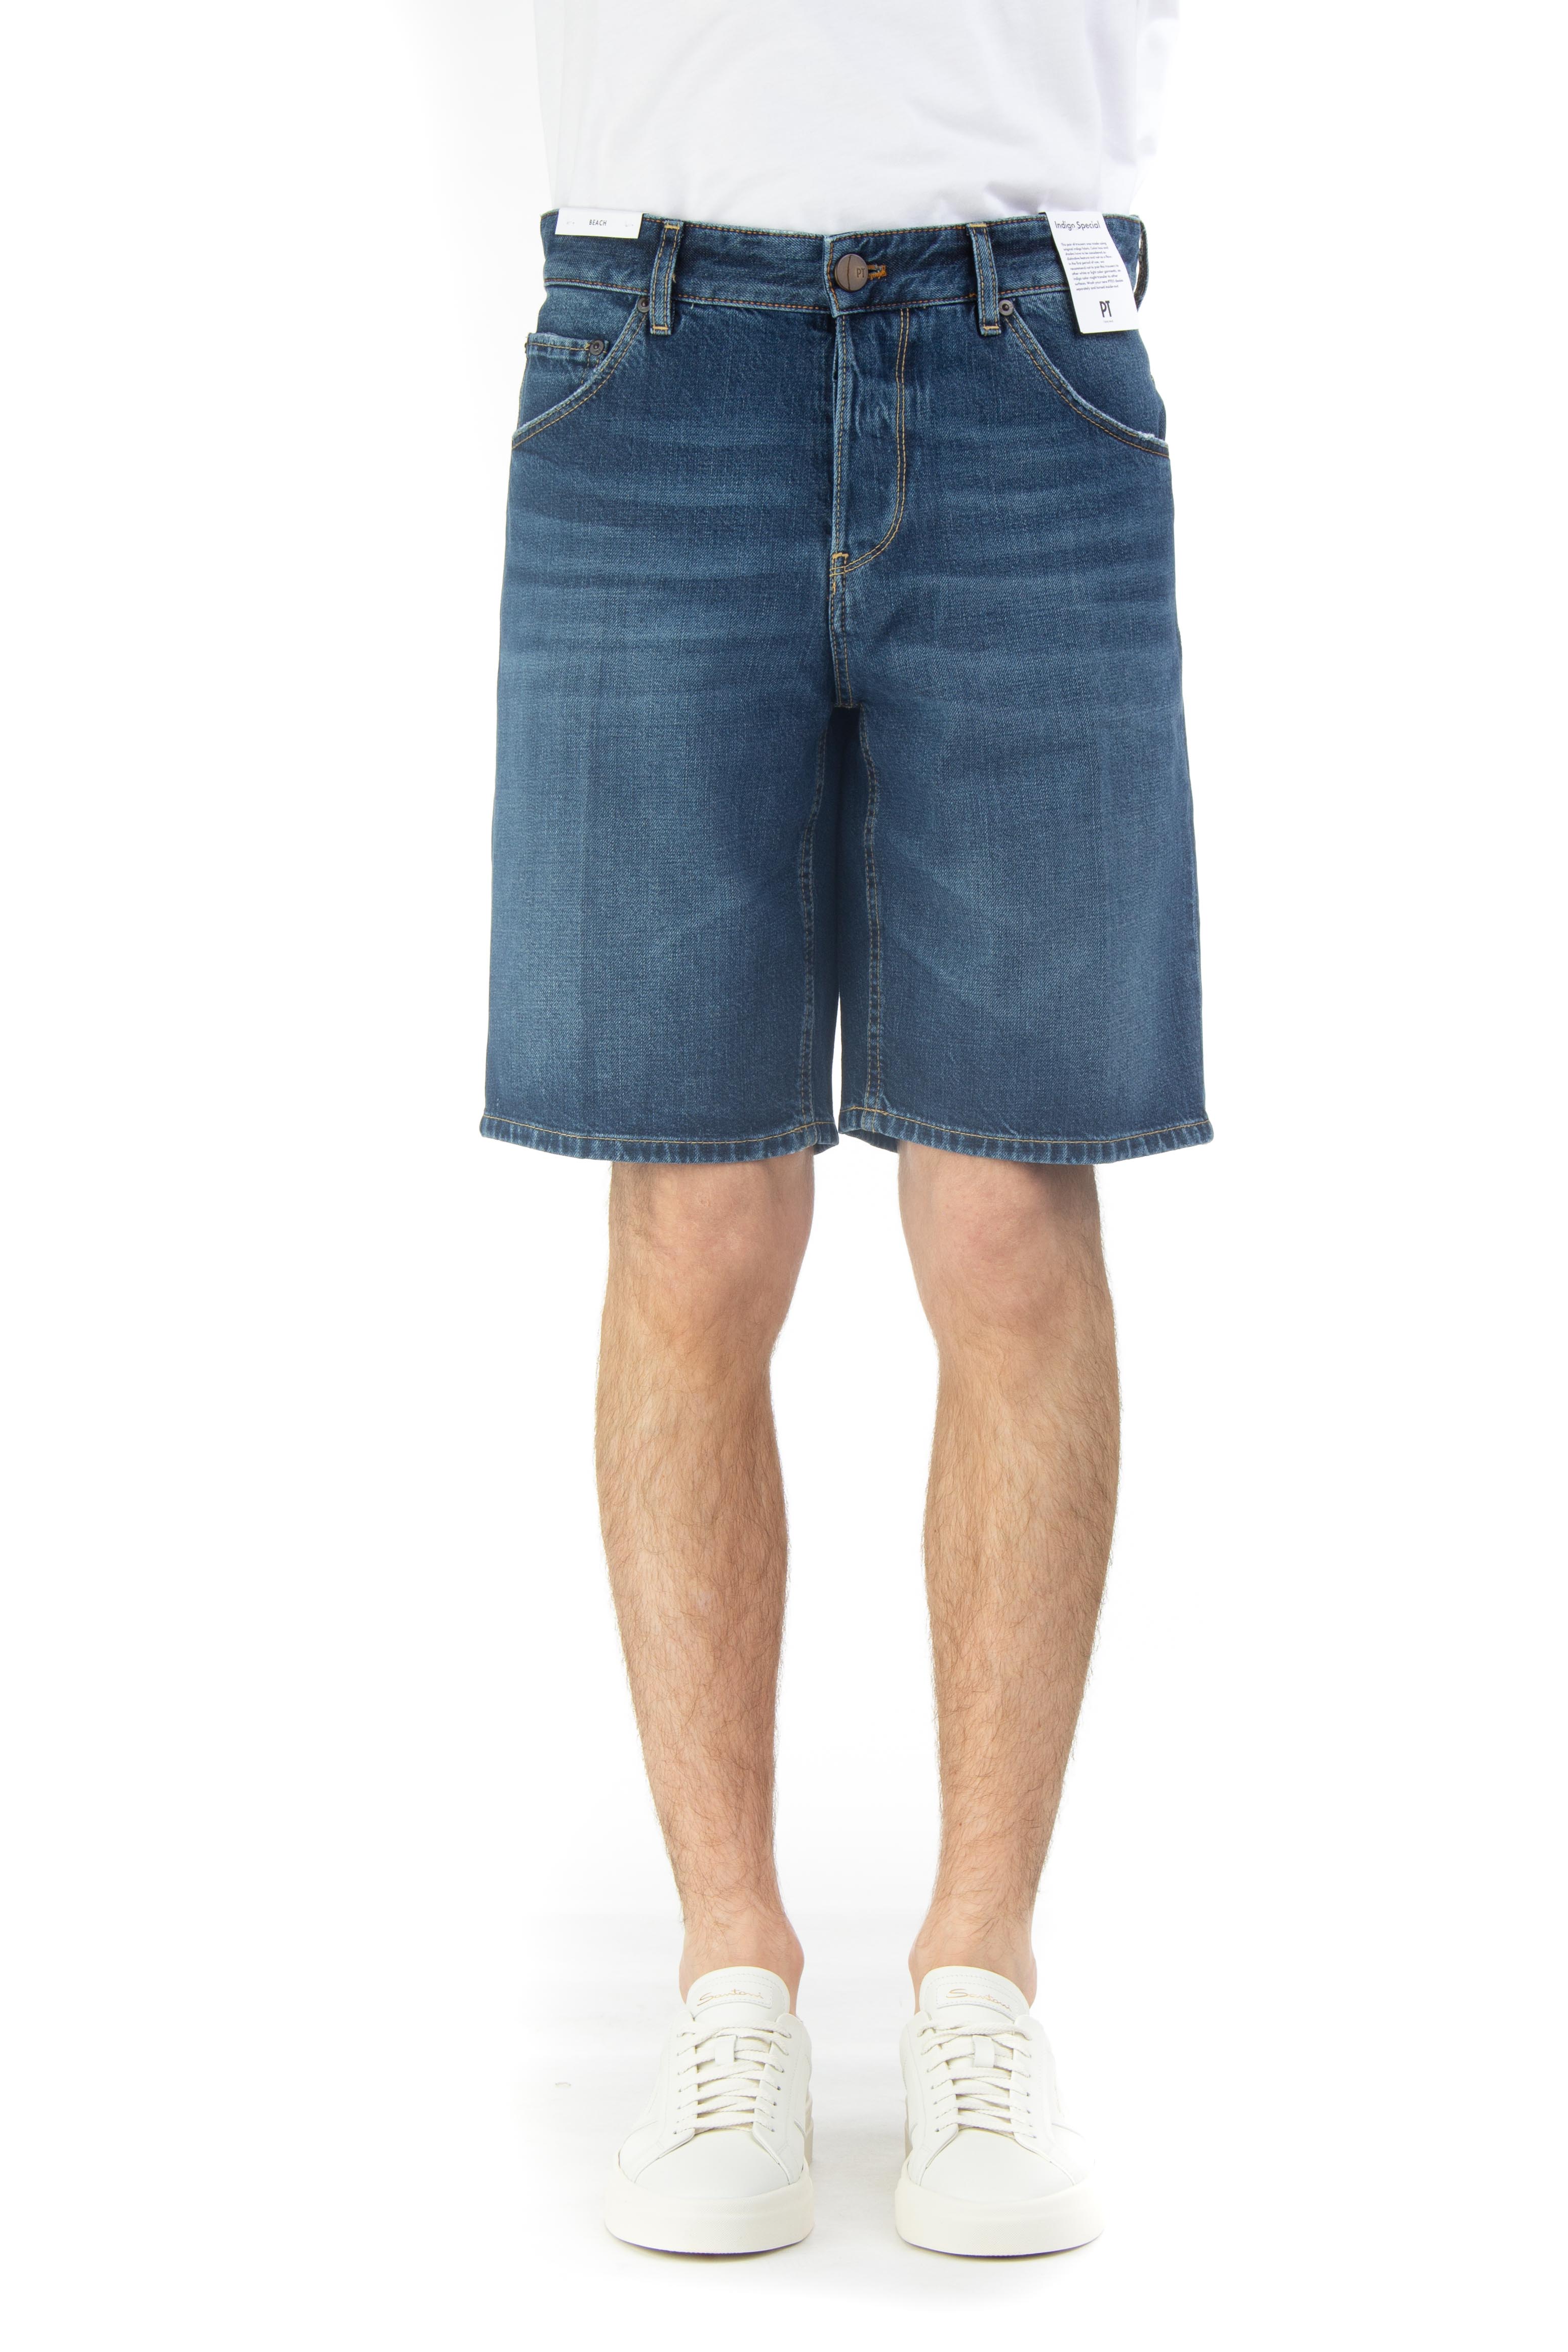 Beach style denim Bermuda shorts